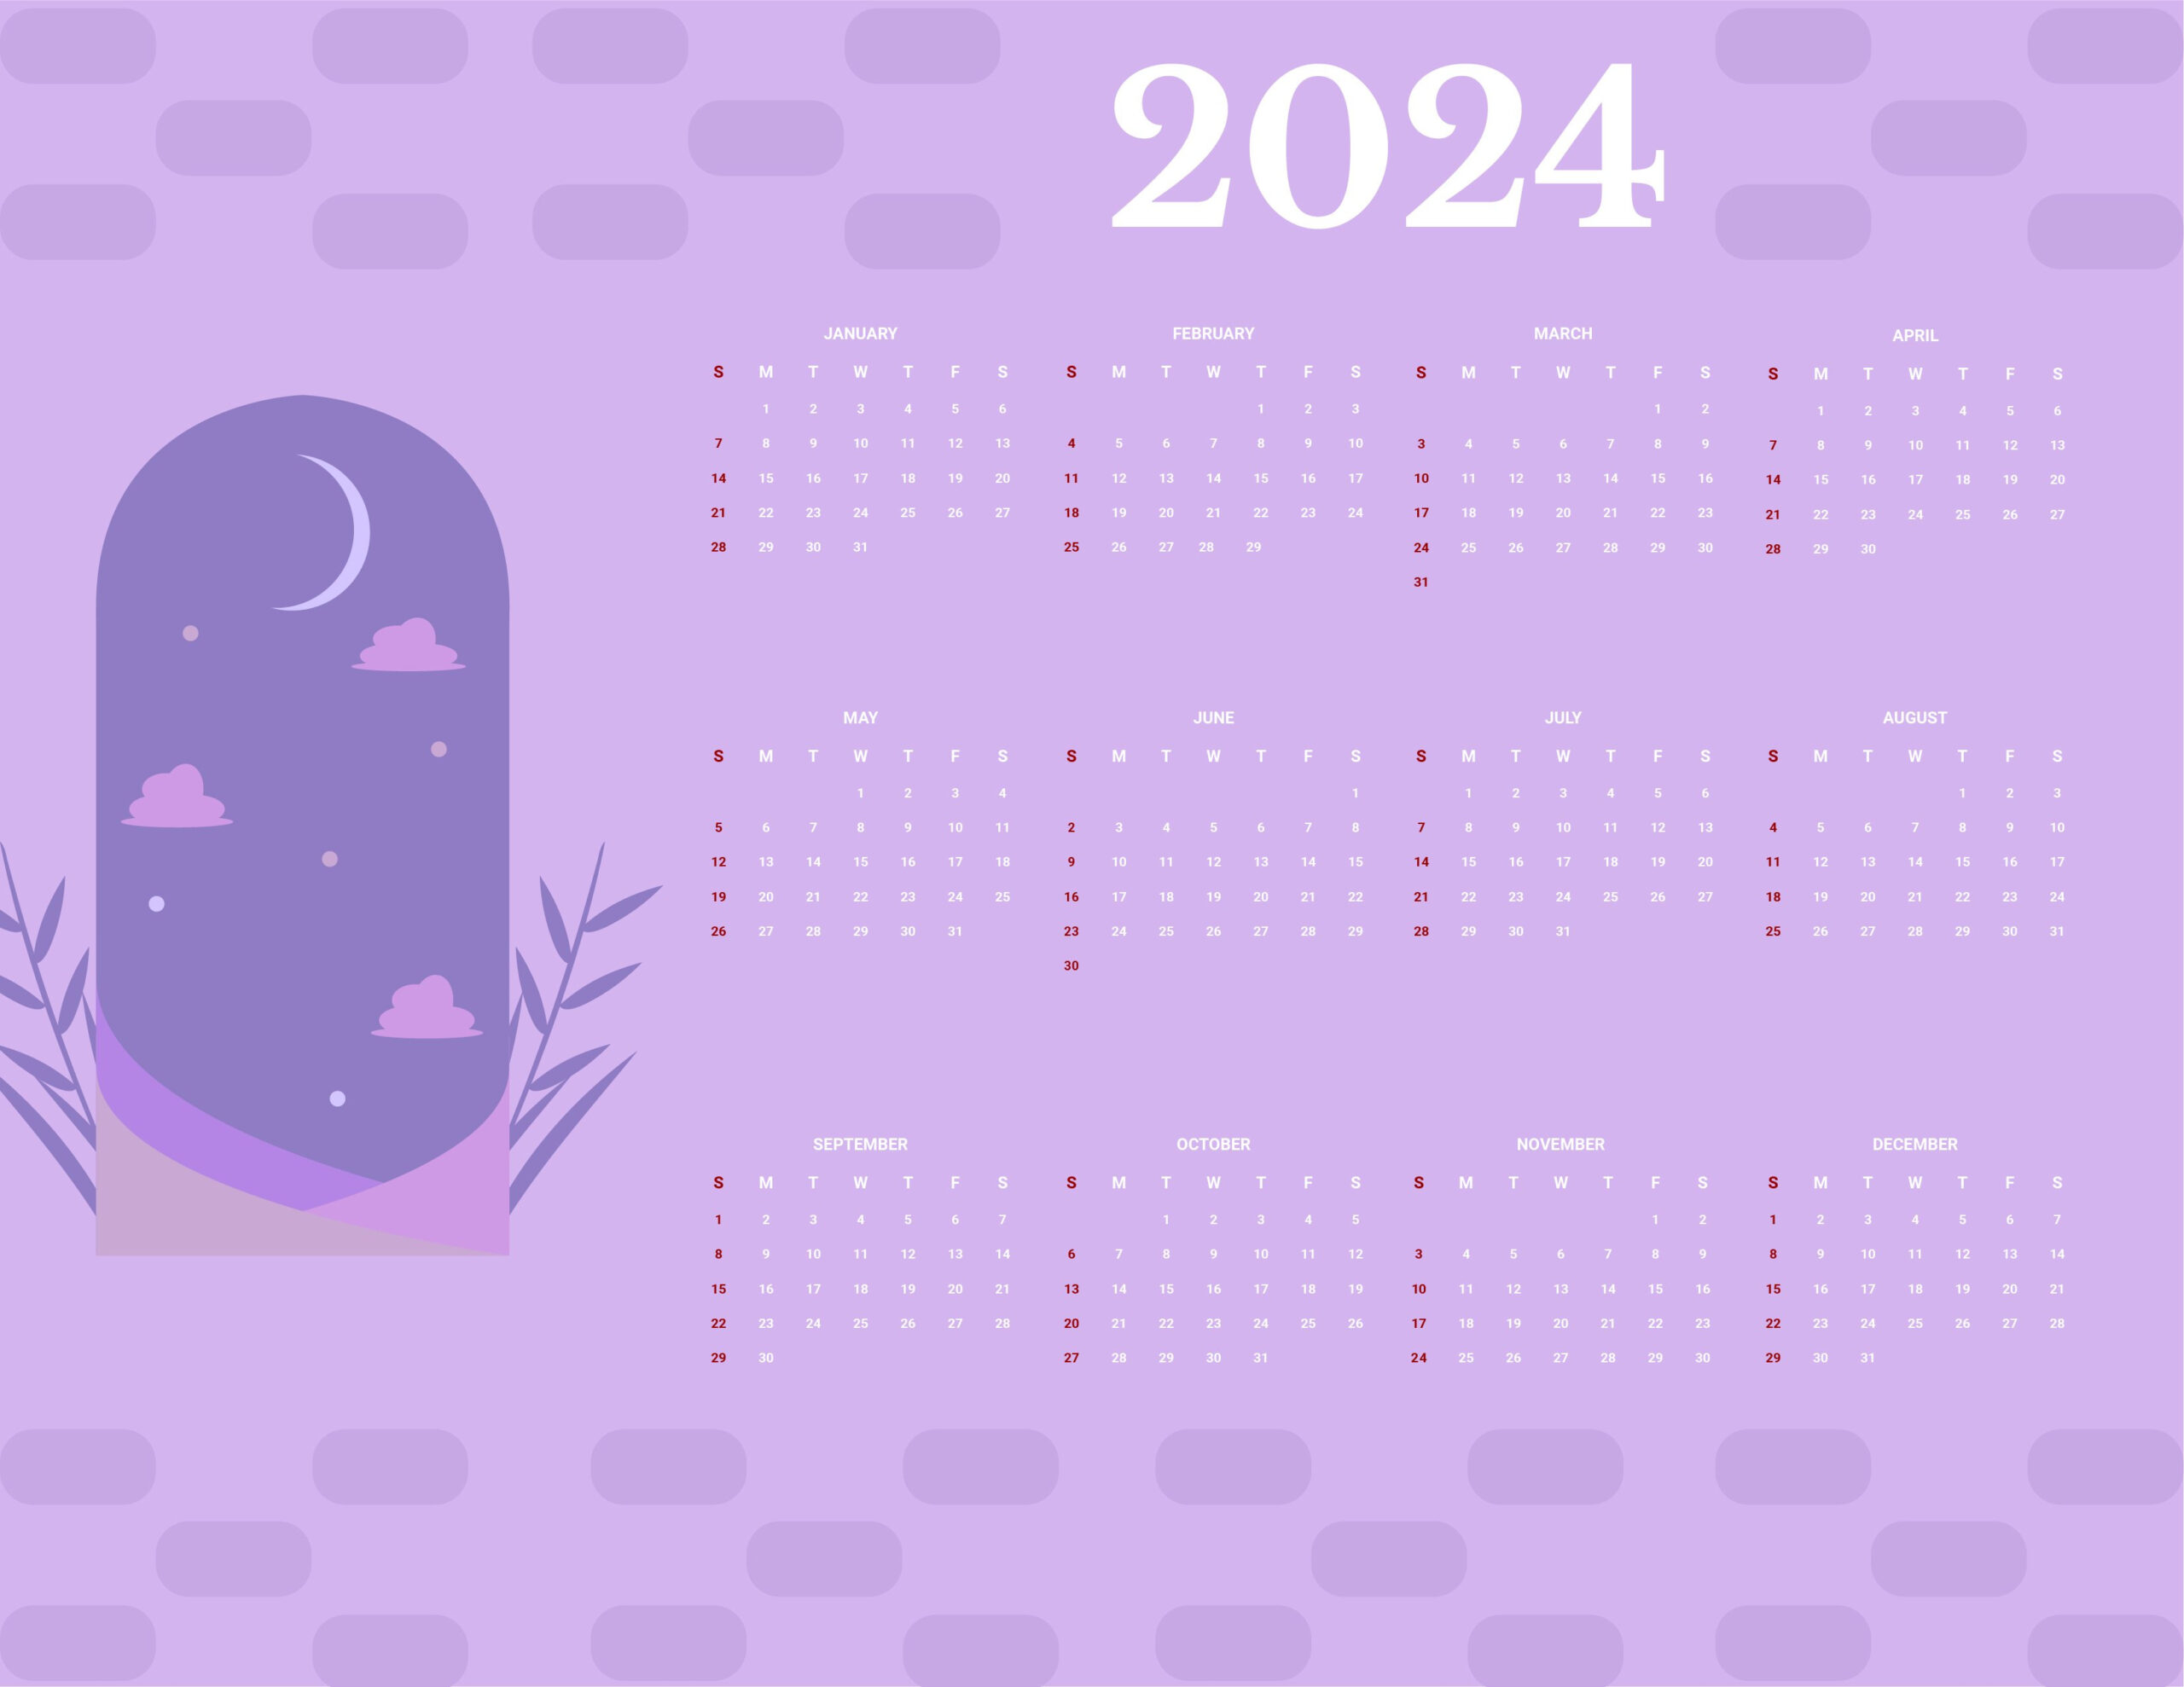 Free Pretty Year 2024 Calendar - Download In Word, Google Docs | Calendar Template 2024 Google Docs